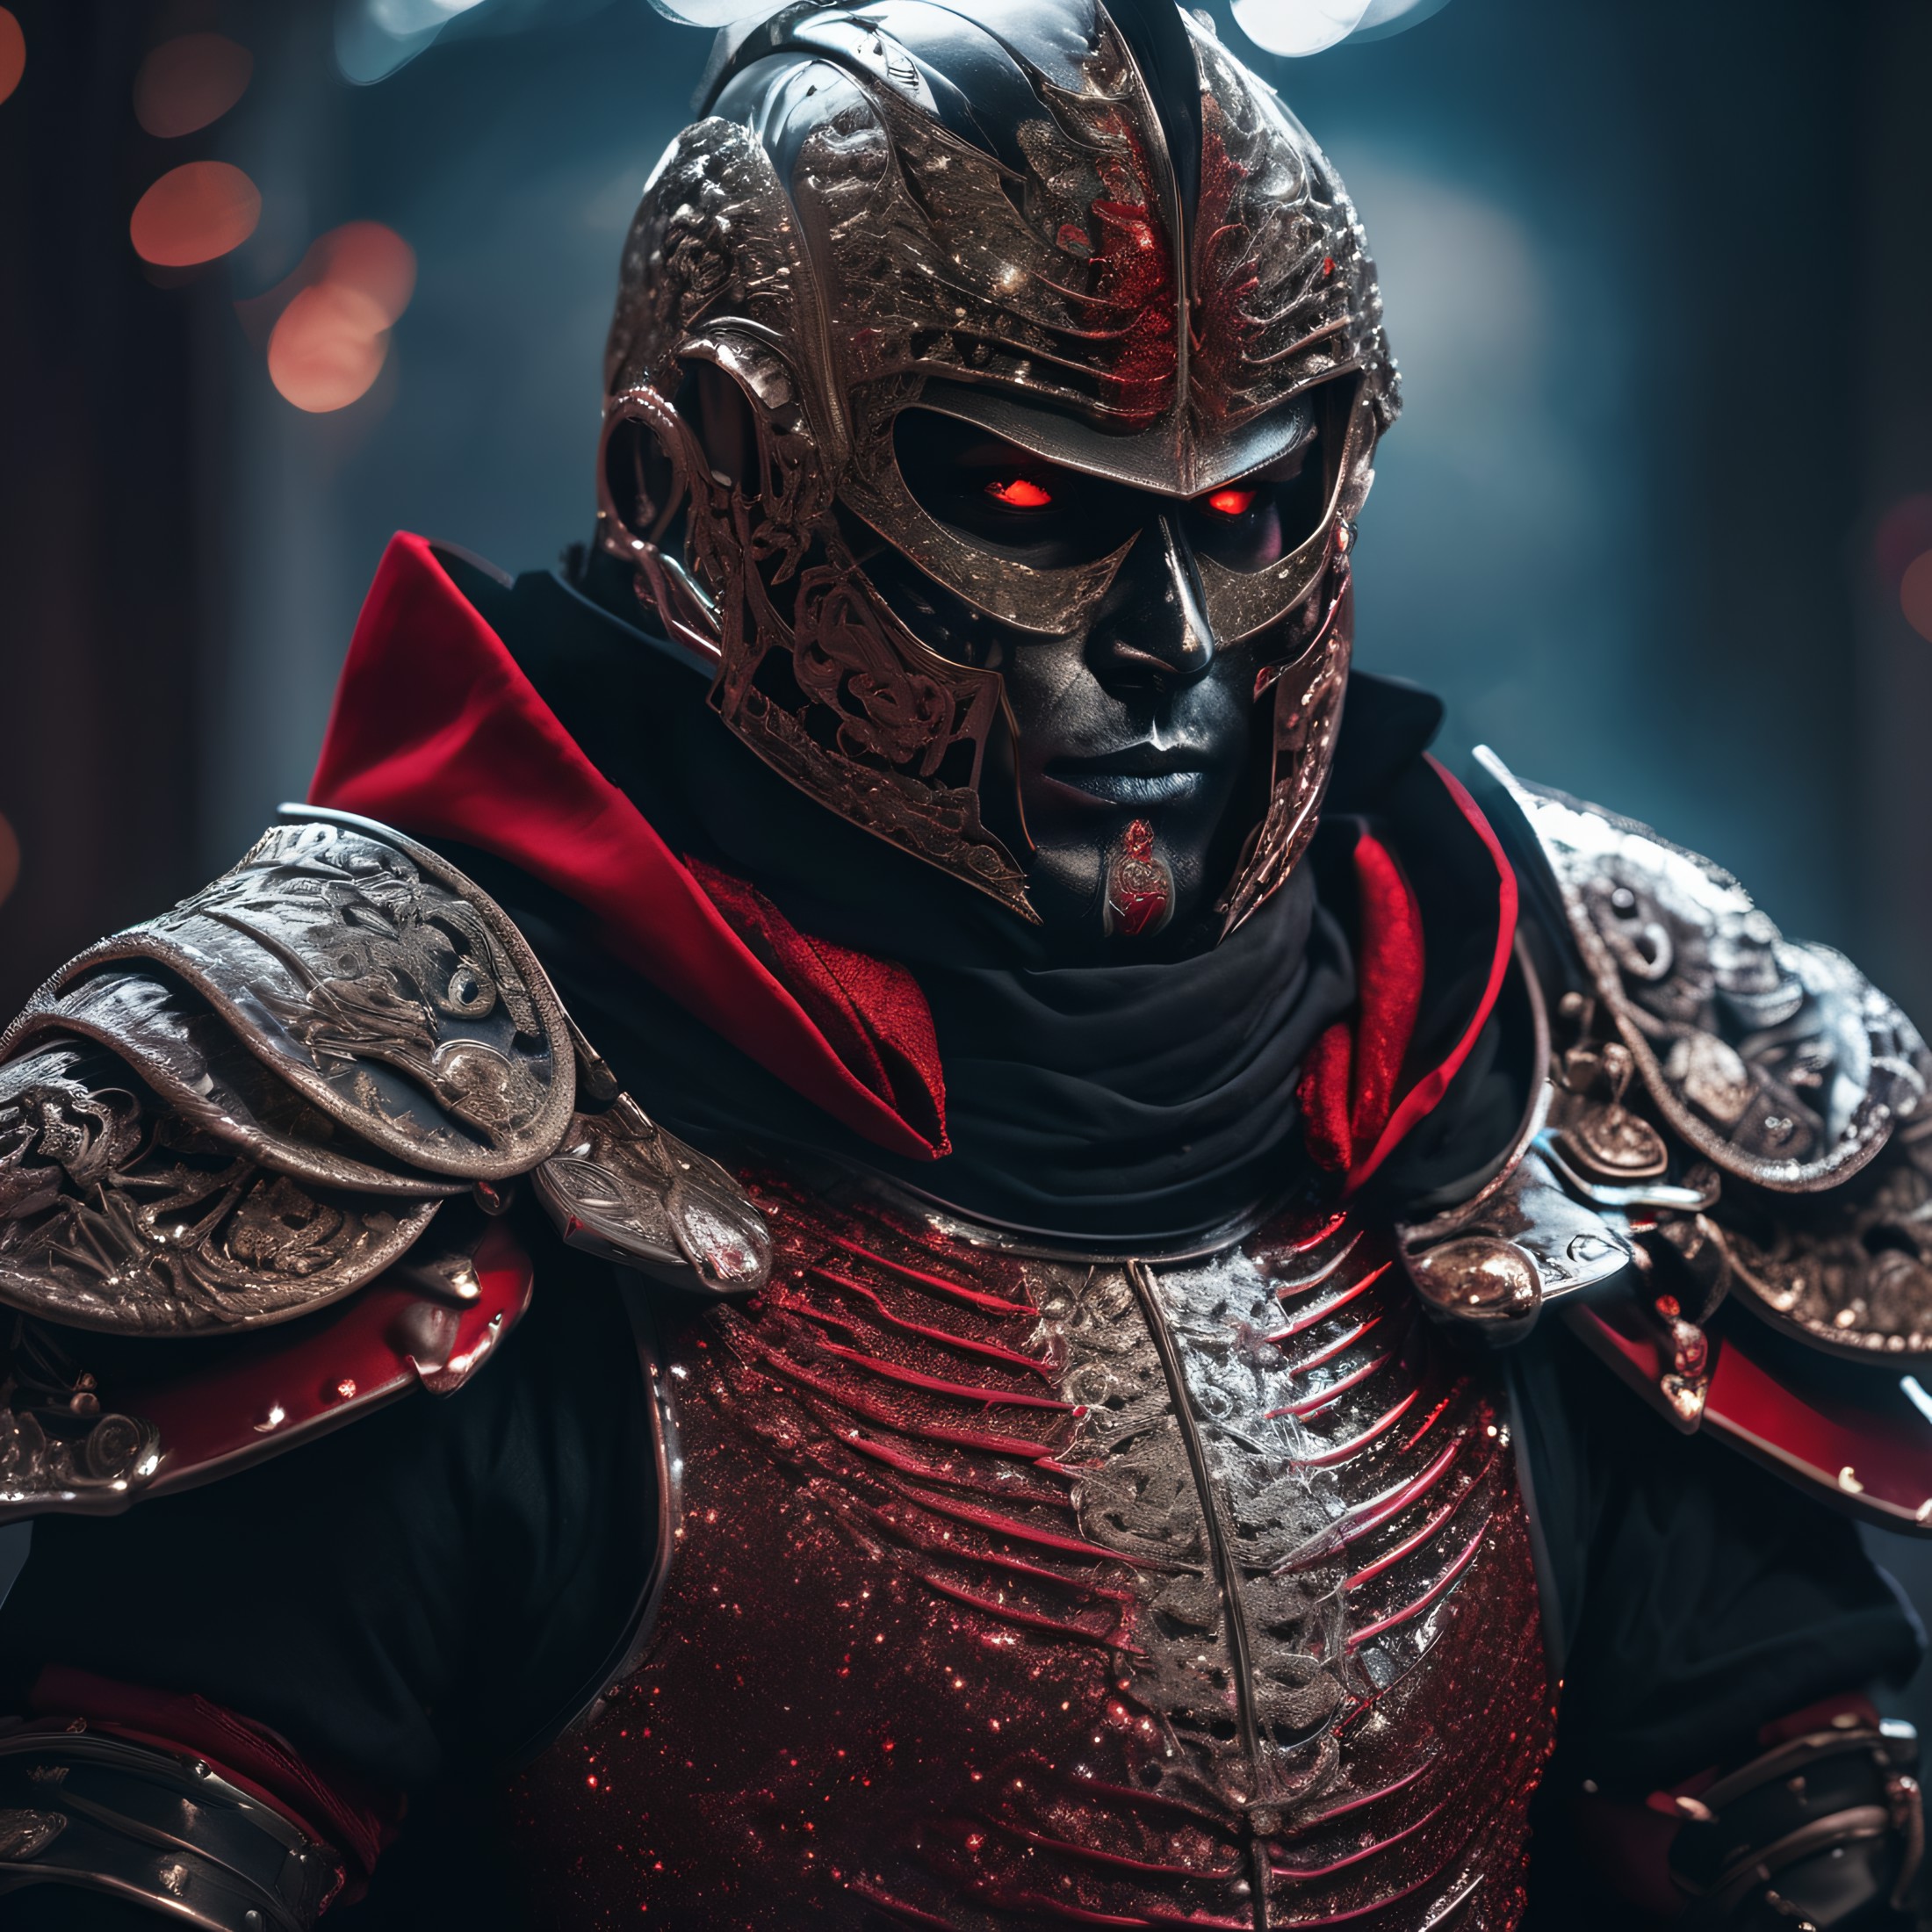 Skull face warrior, wearing black armor posing, elaborate scene style, glitter, red, realistic style, 8k,exposure blend, m...